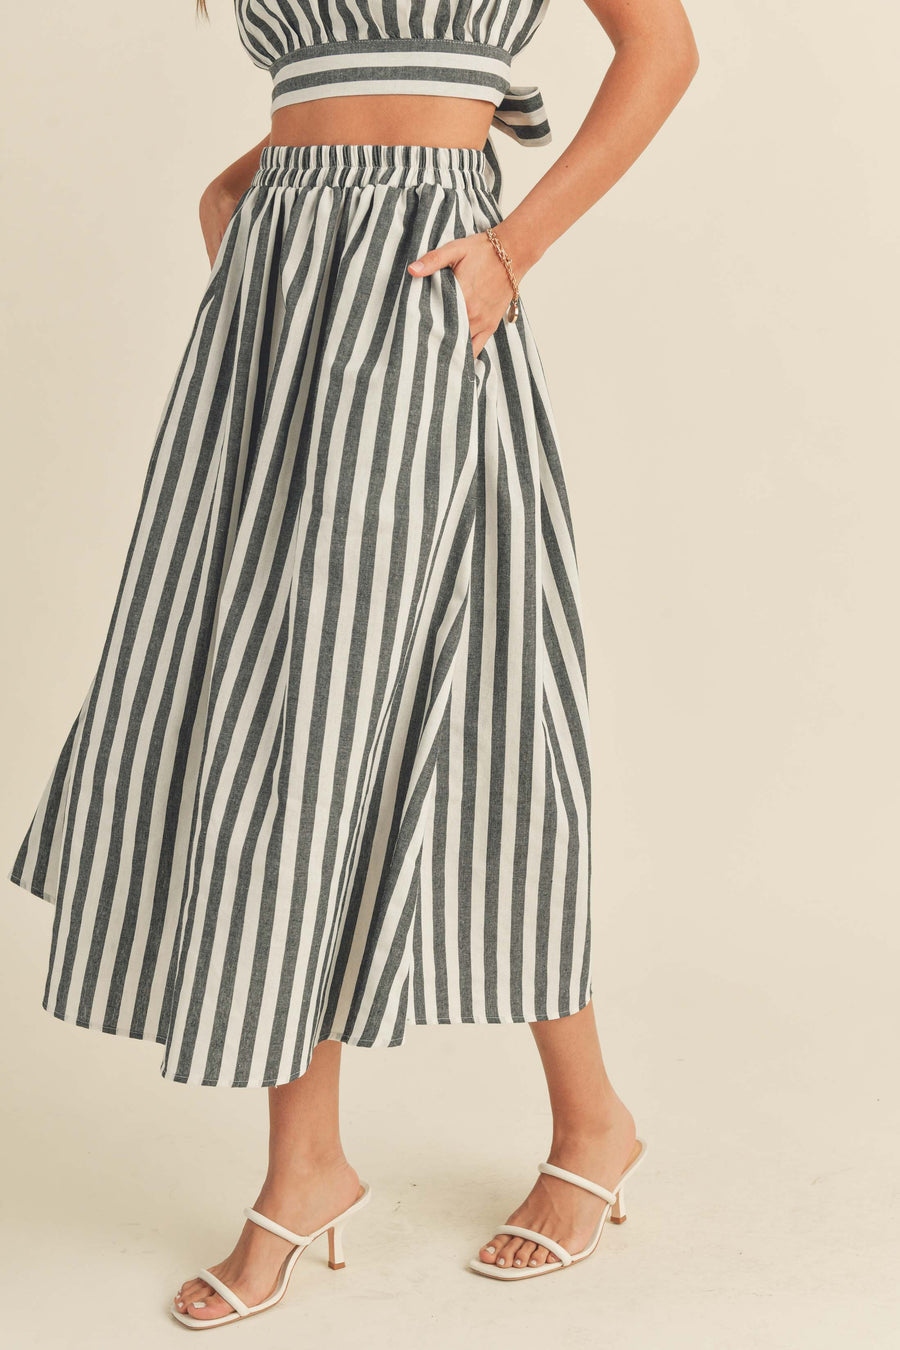 The Positano Crop Top + Midi Skirt Set - Sold Separately